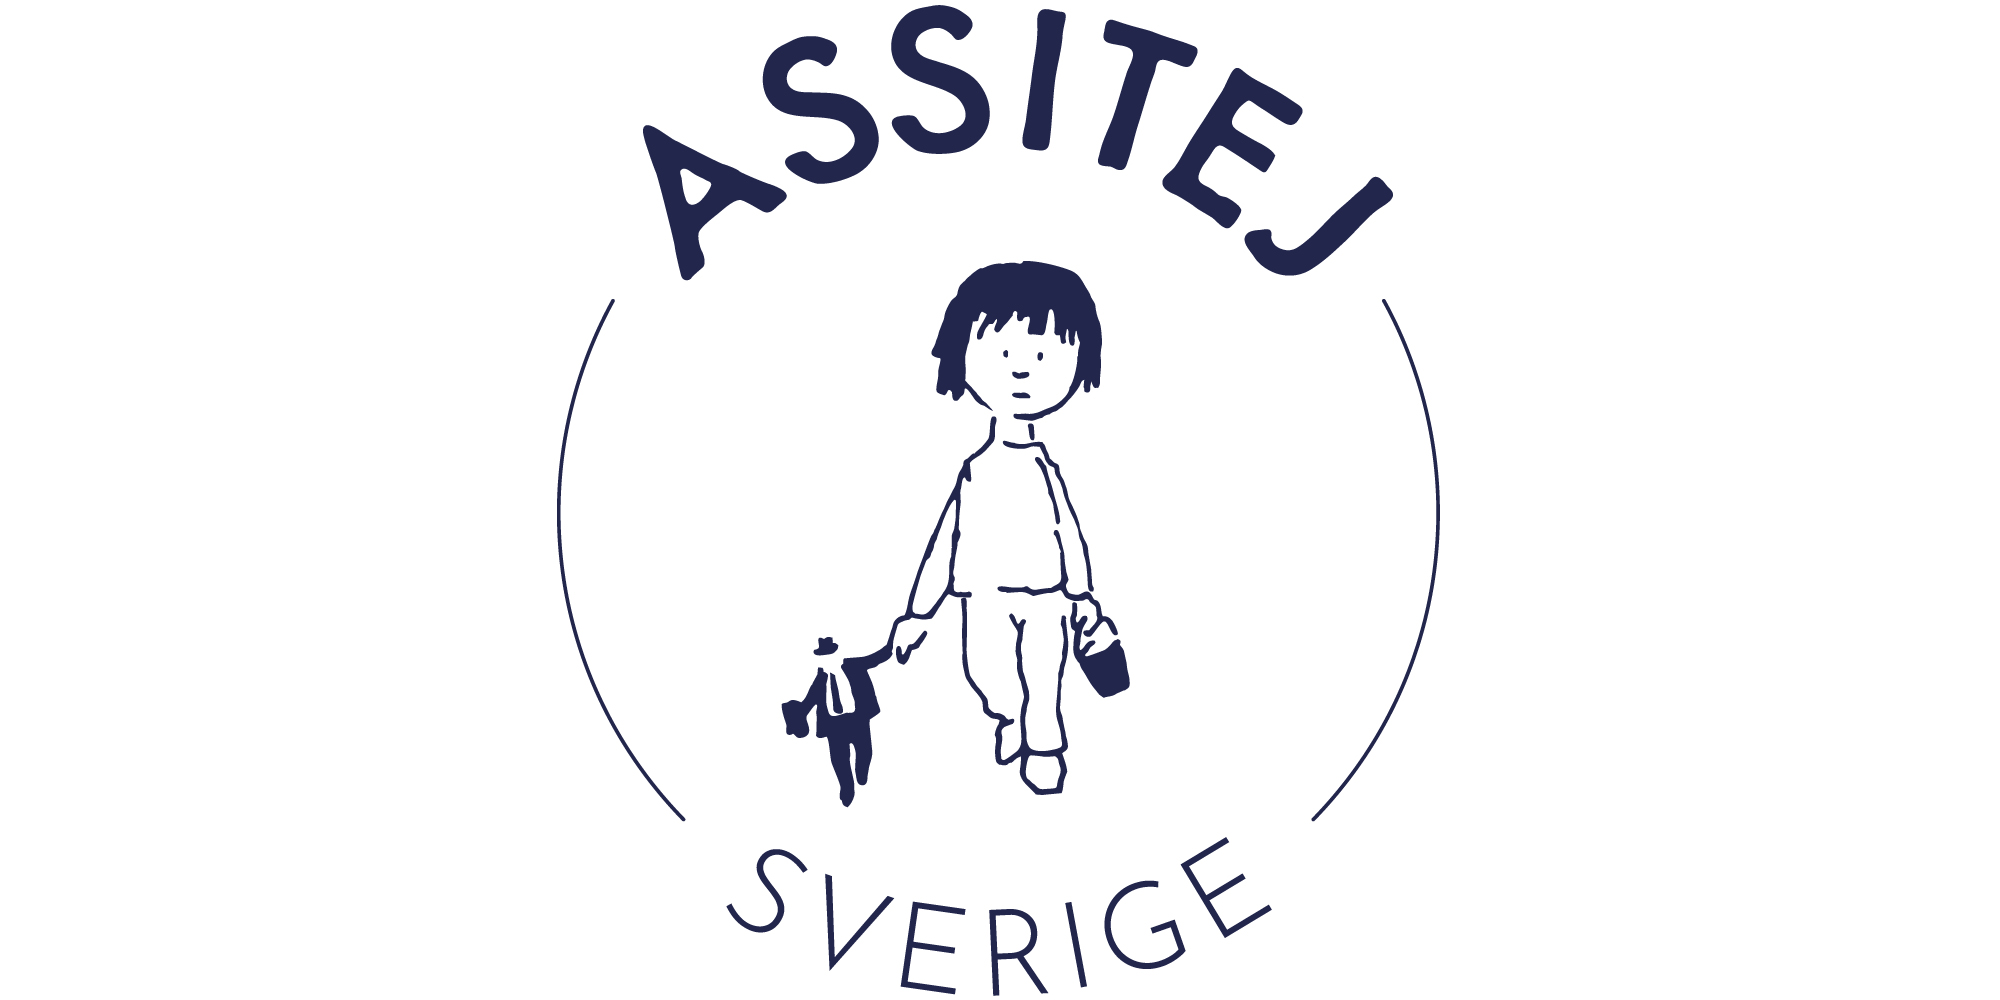 Talk with ASSITEJ Sweden